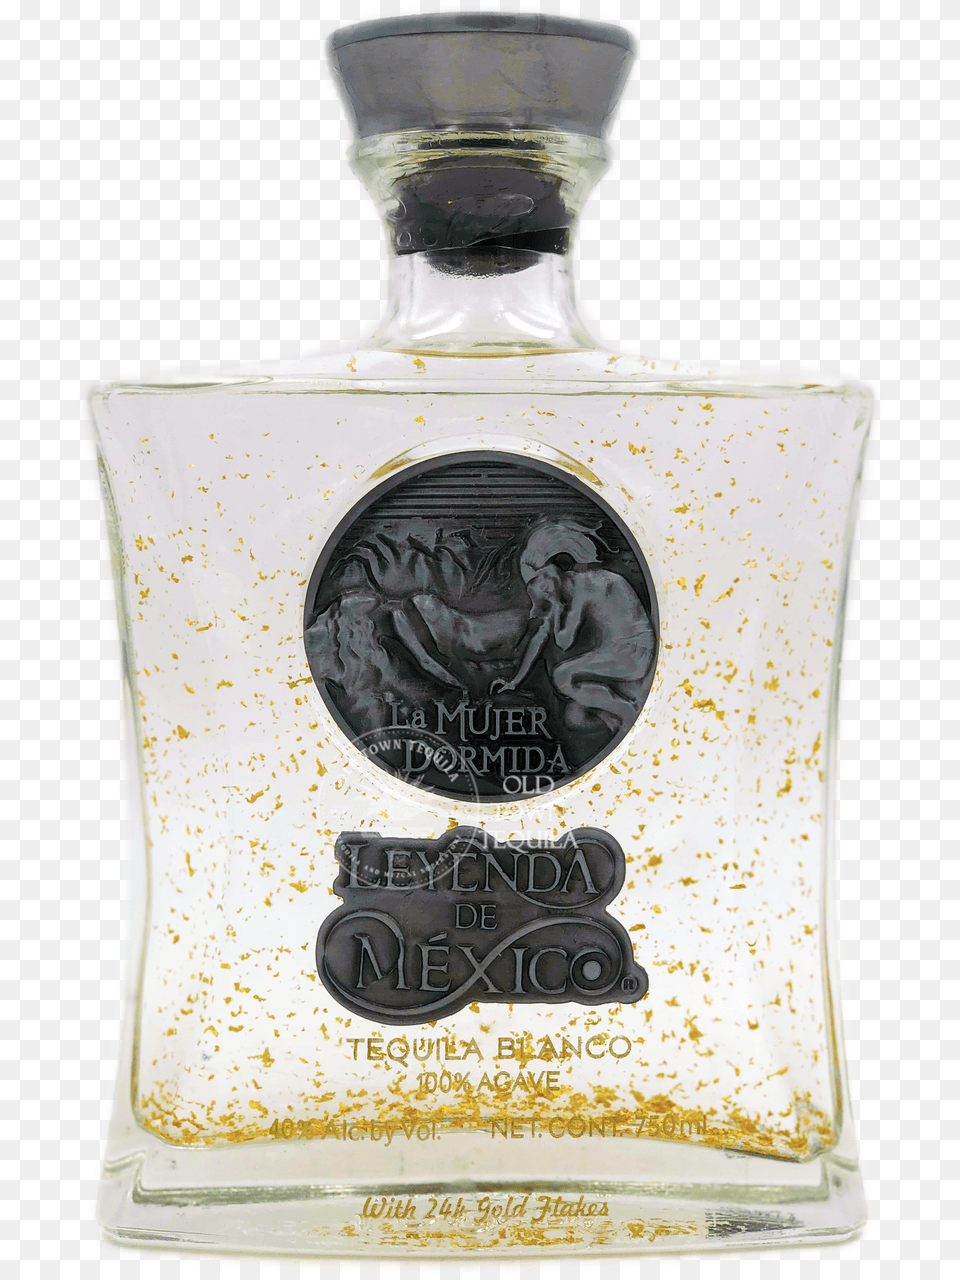 Leyenda De Mexico Blanco Tequila With 24 Gold Flake Perfume, Alcohol, Beverage, Liquor, Bottle Png Image